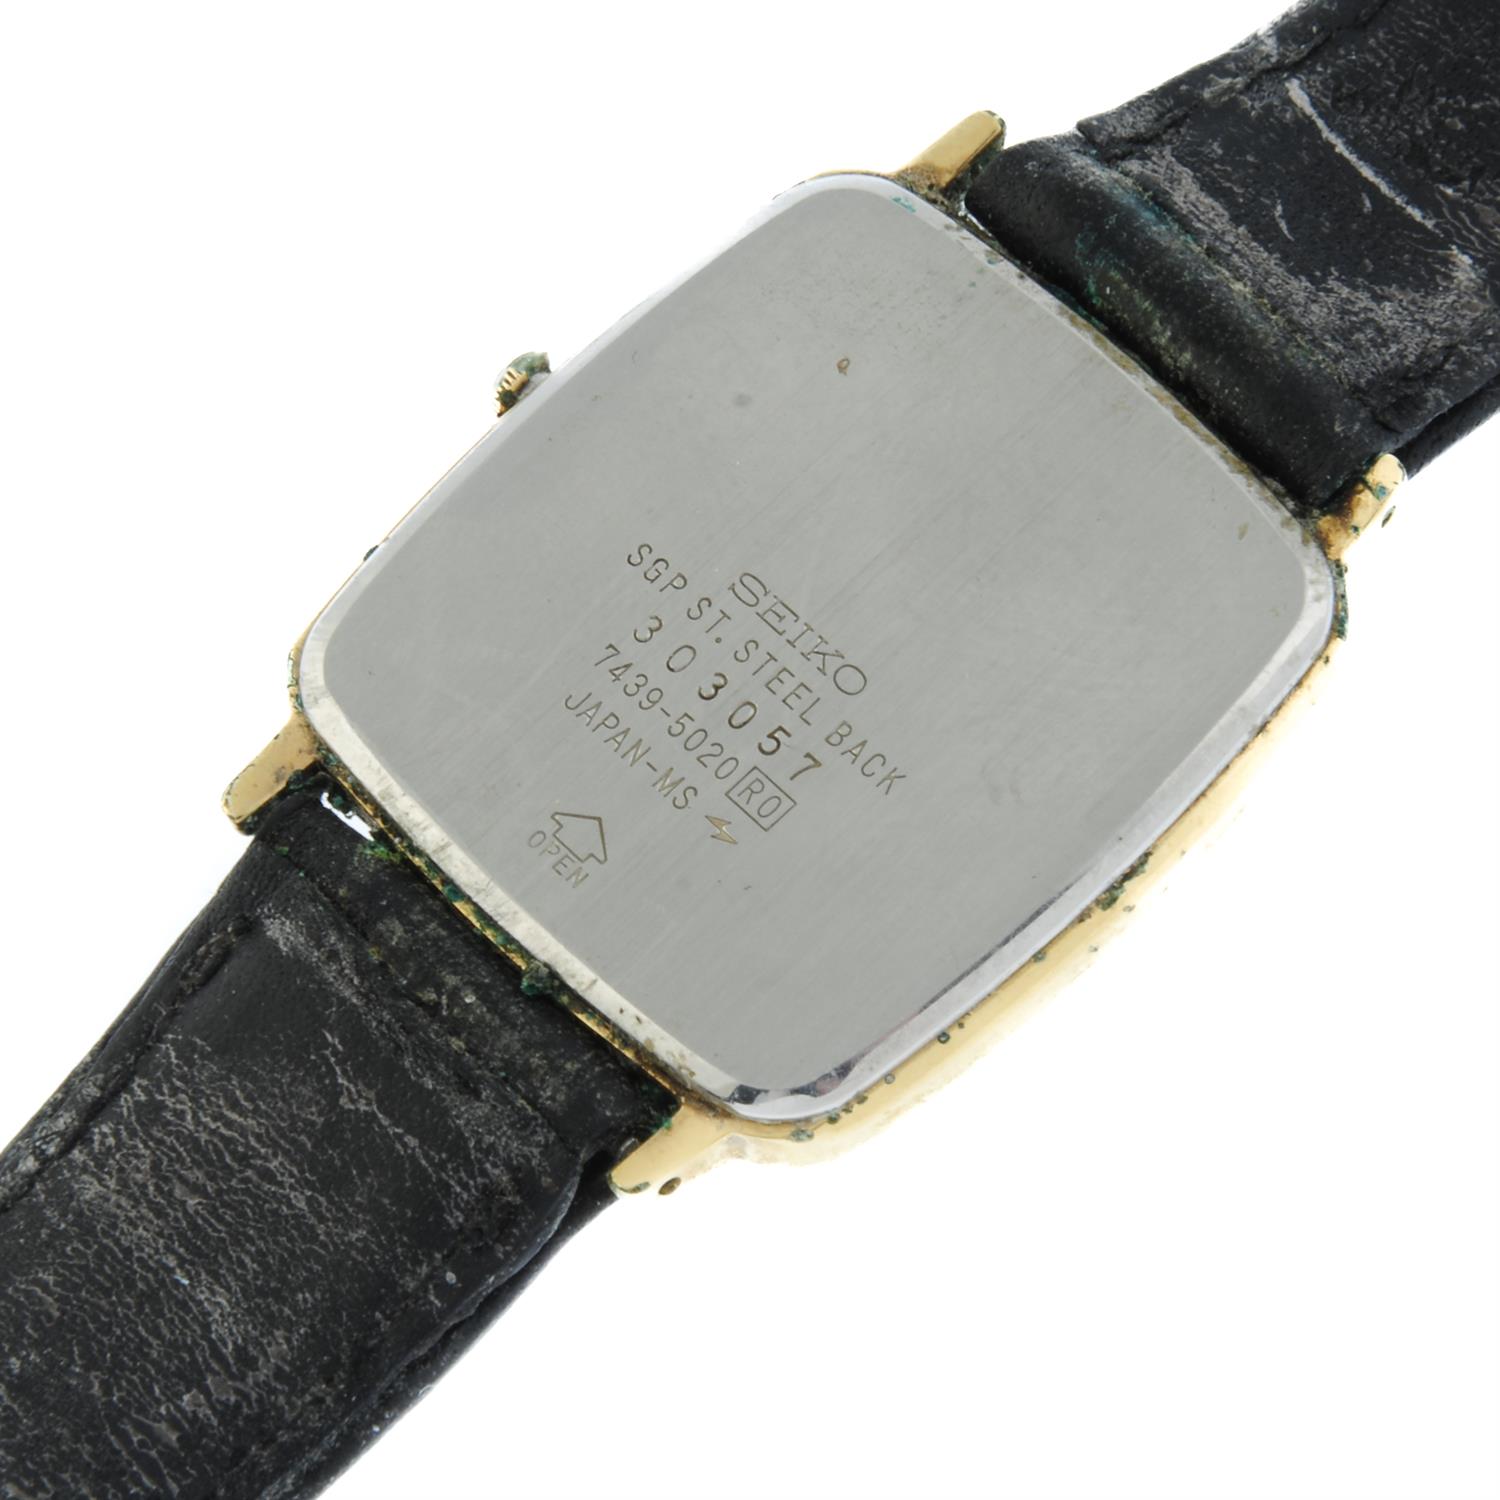 Seiko - watch, 28mm. - Image 4 of 4